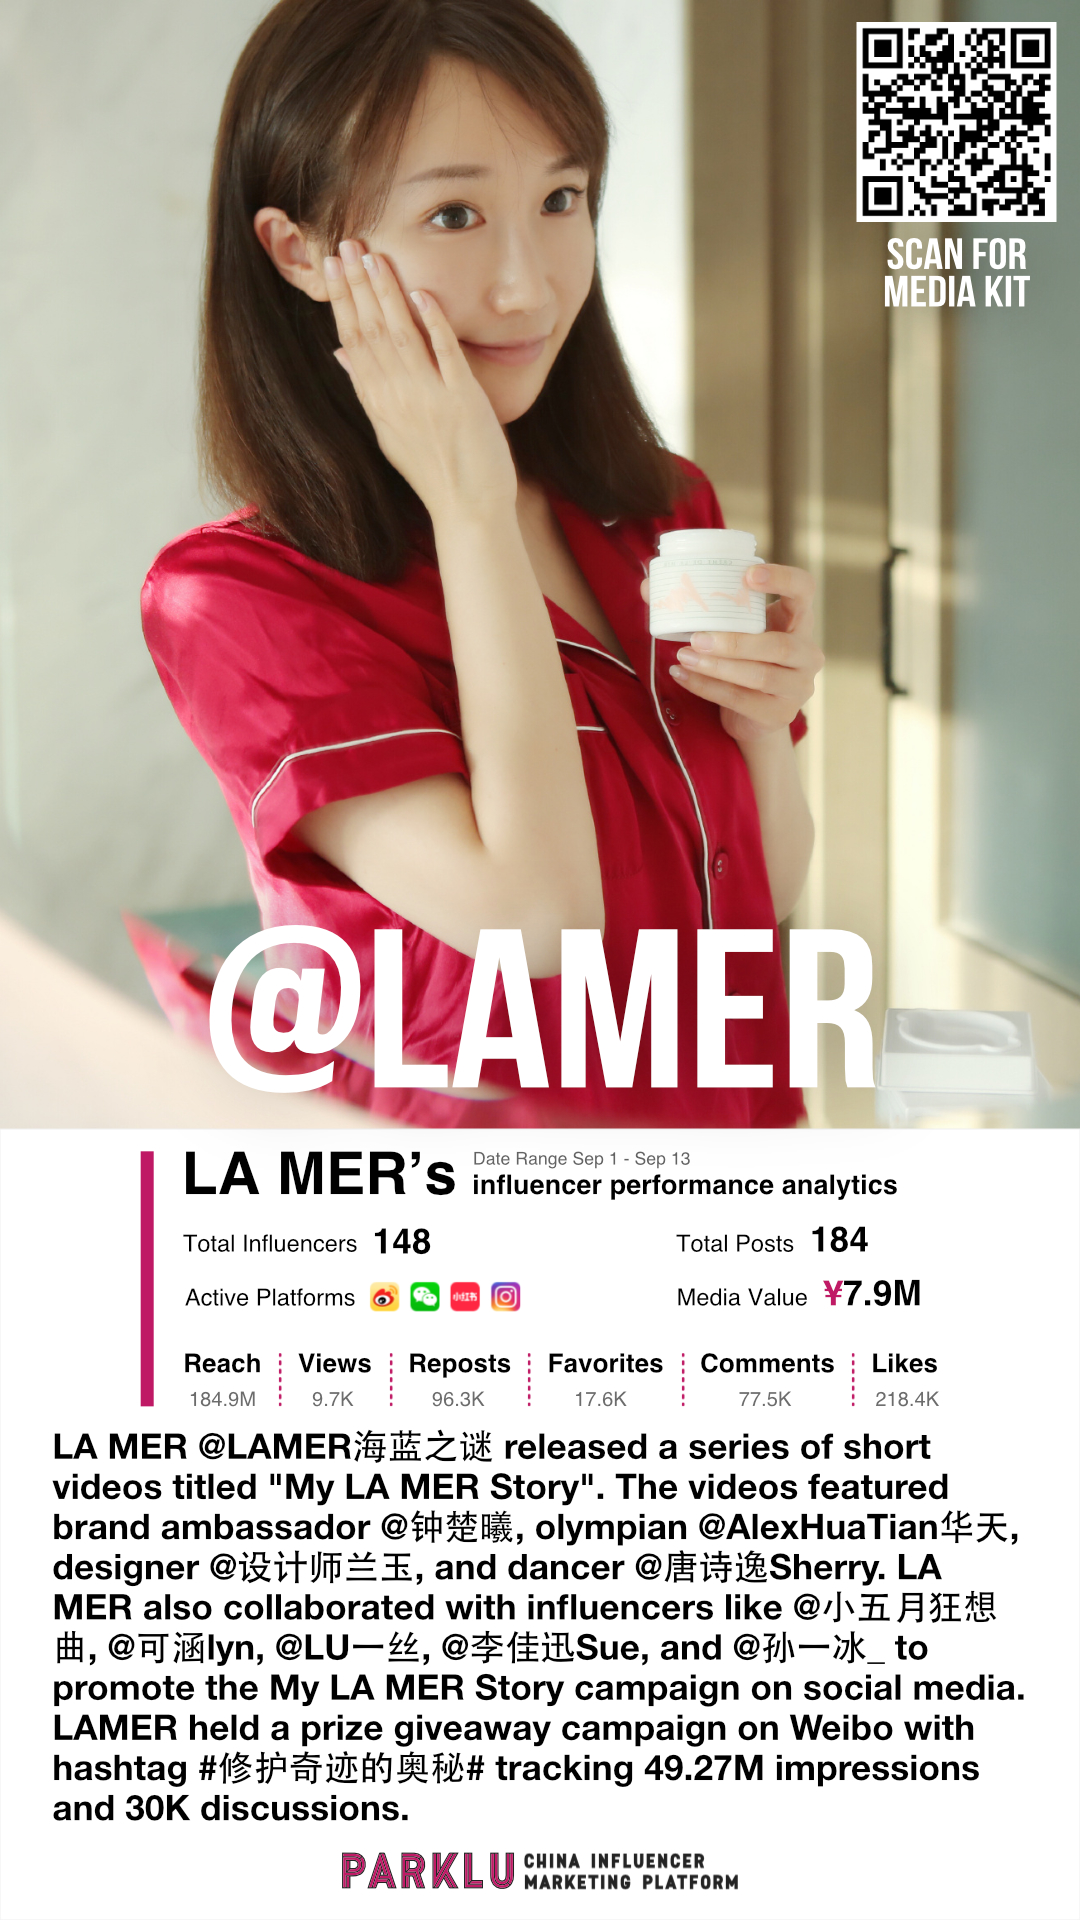 :My LA MER Story" China Campaign